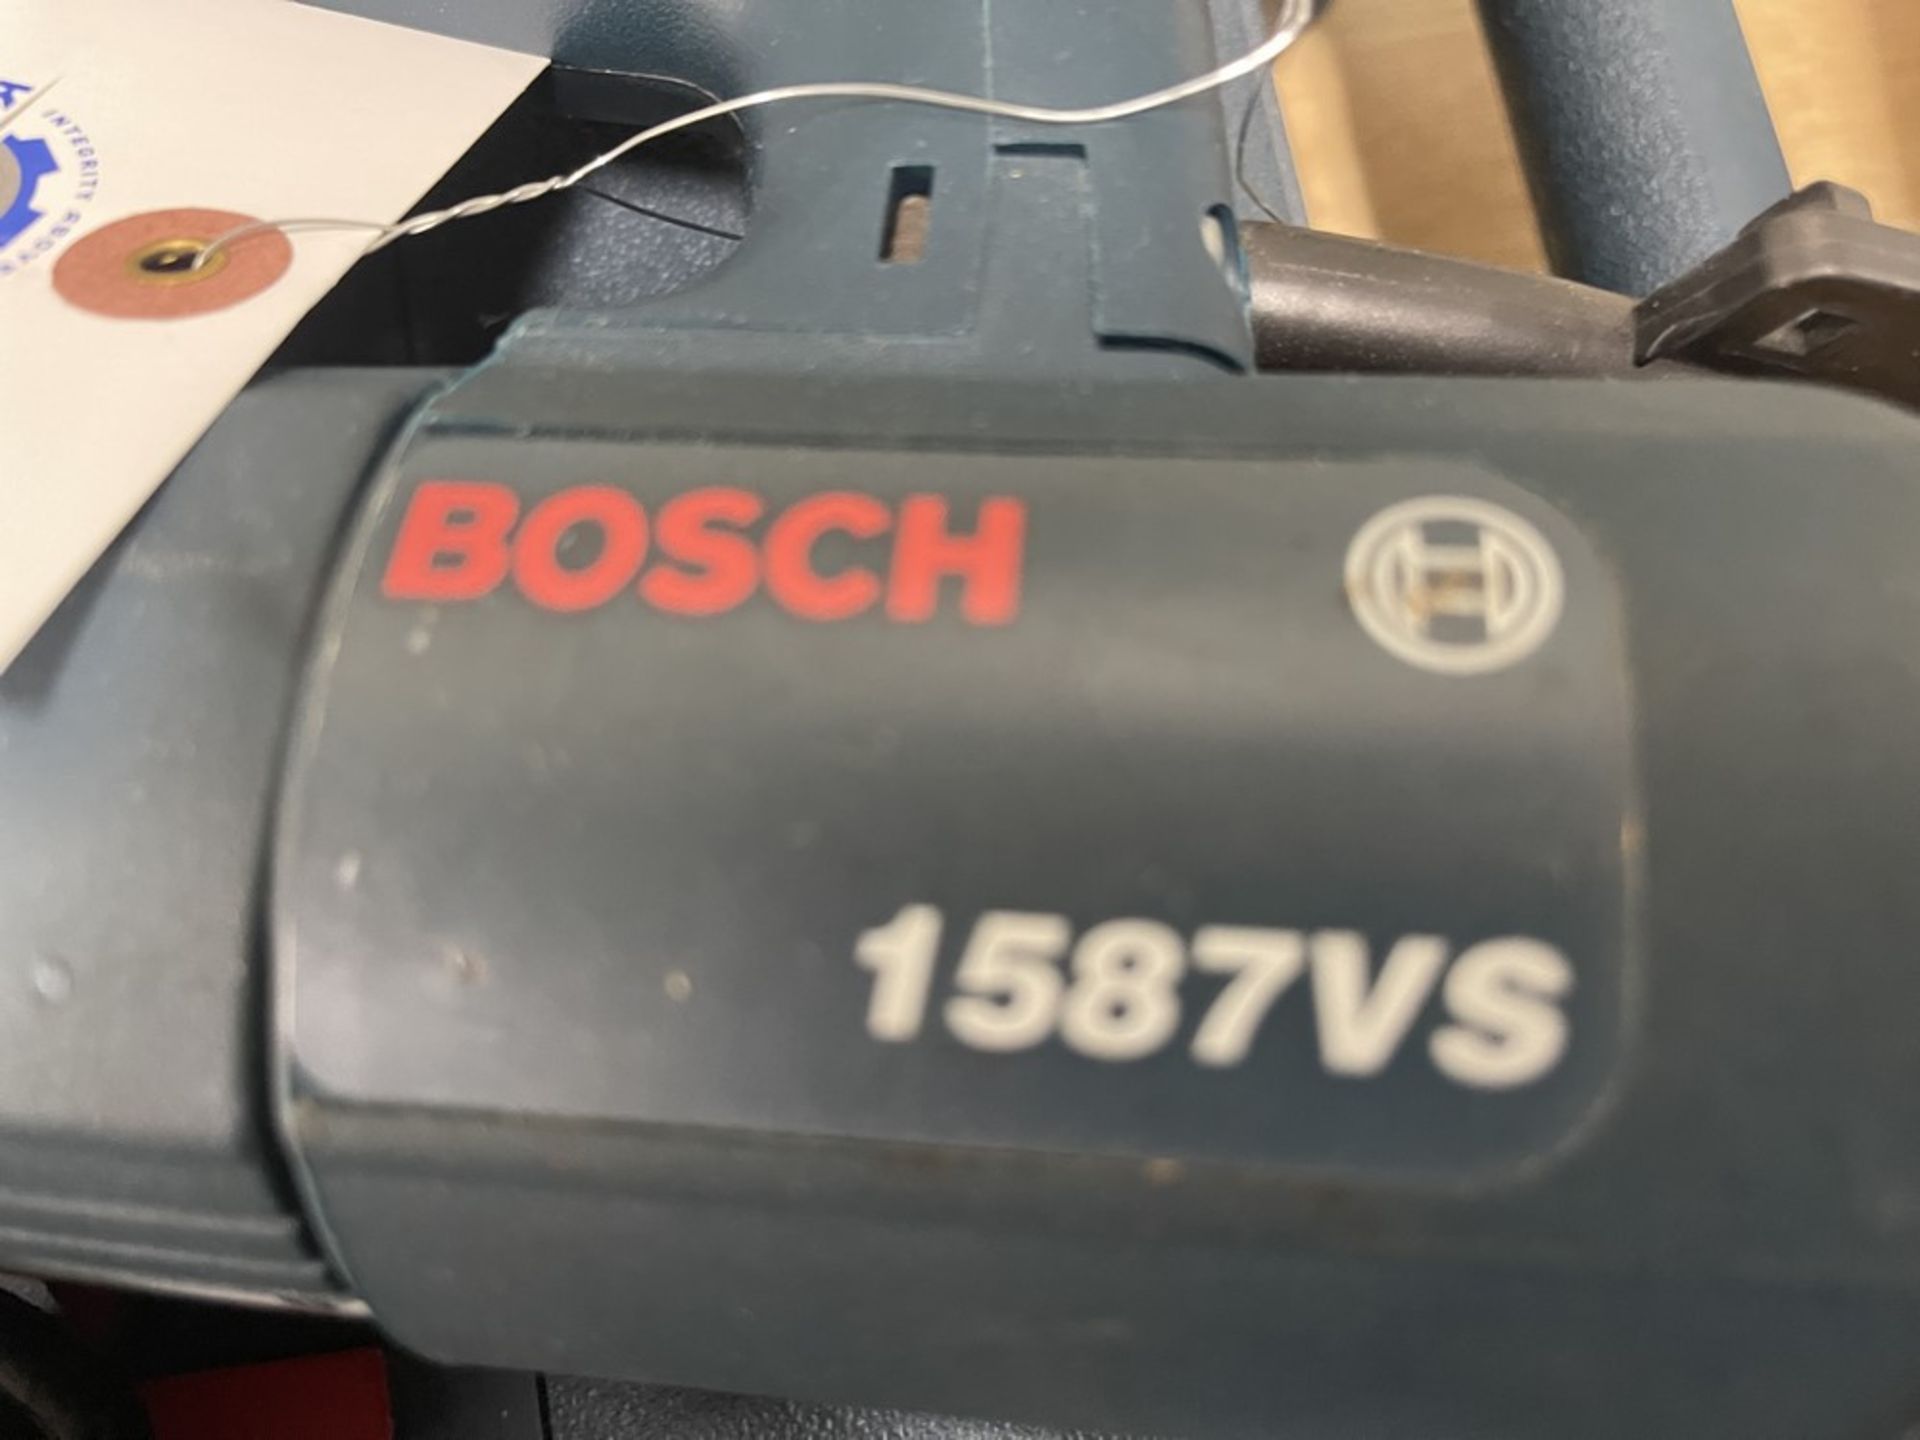 Bosch 1587VS Variable Speed Jigsaw - Image 2 of 2